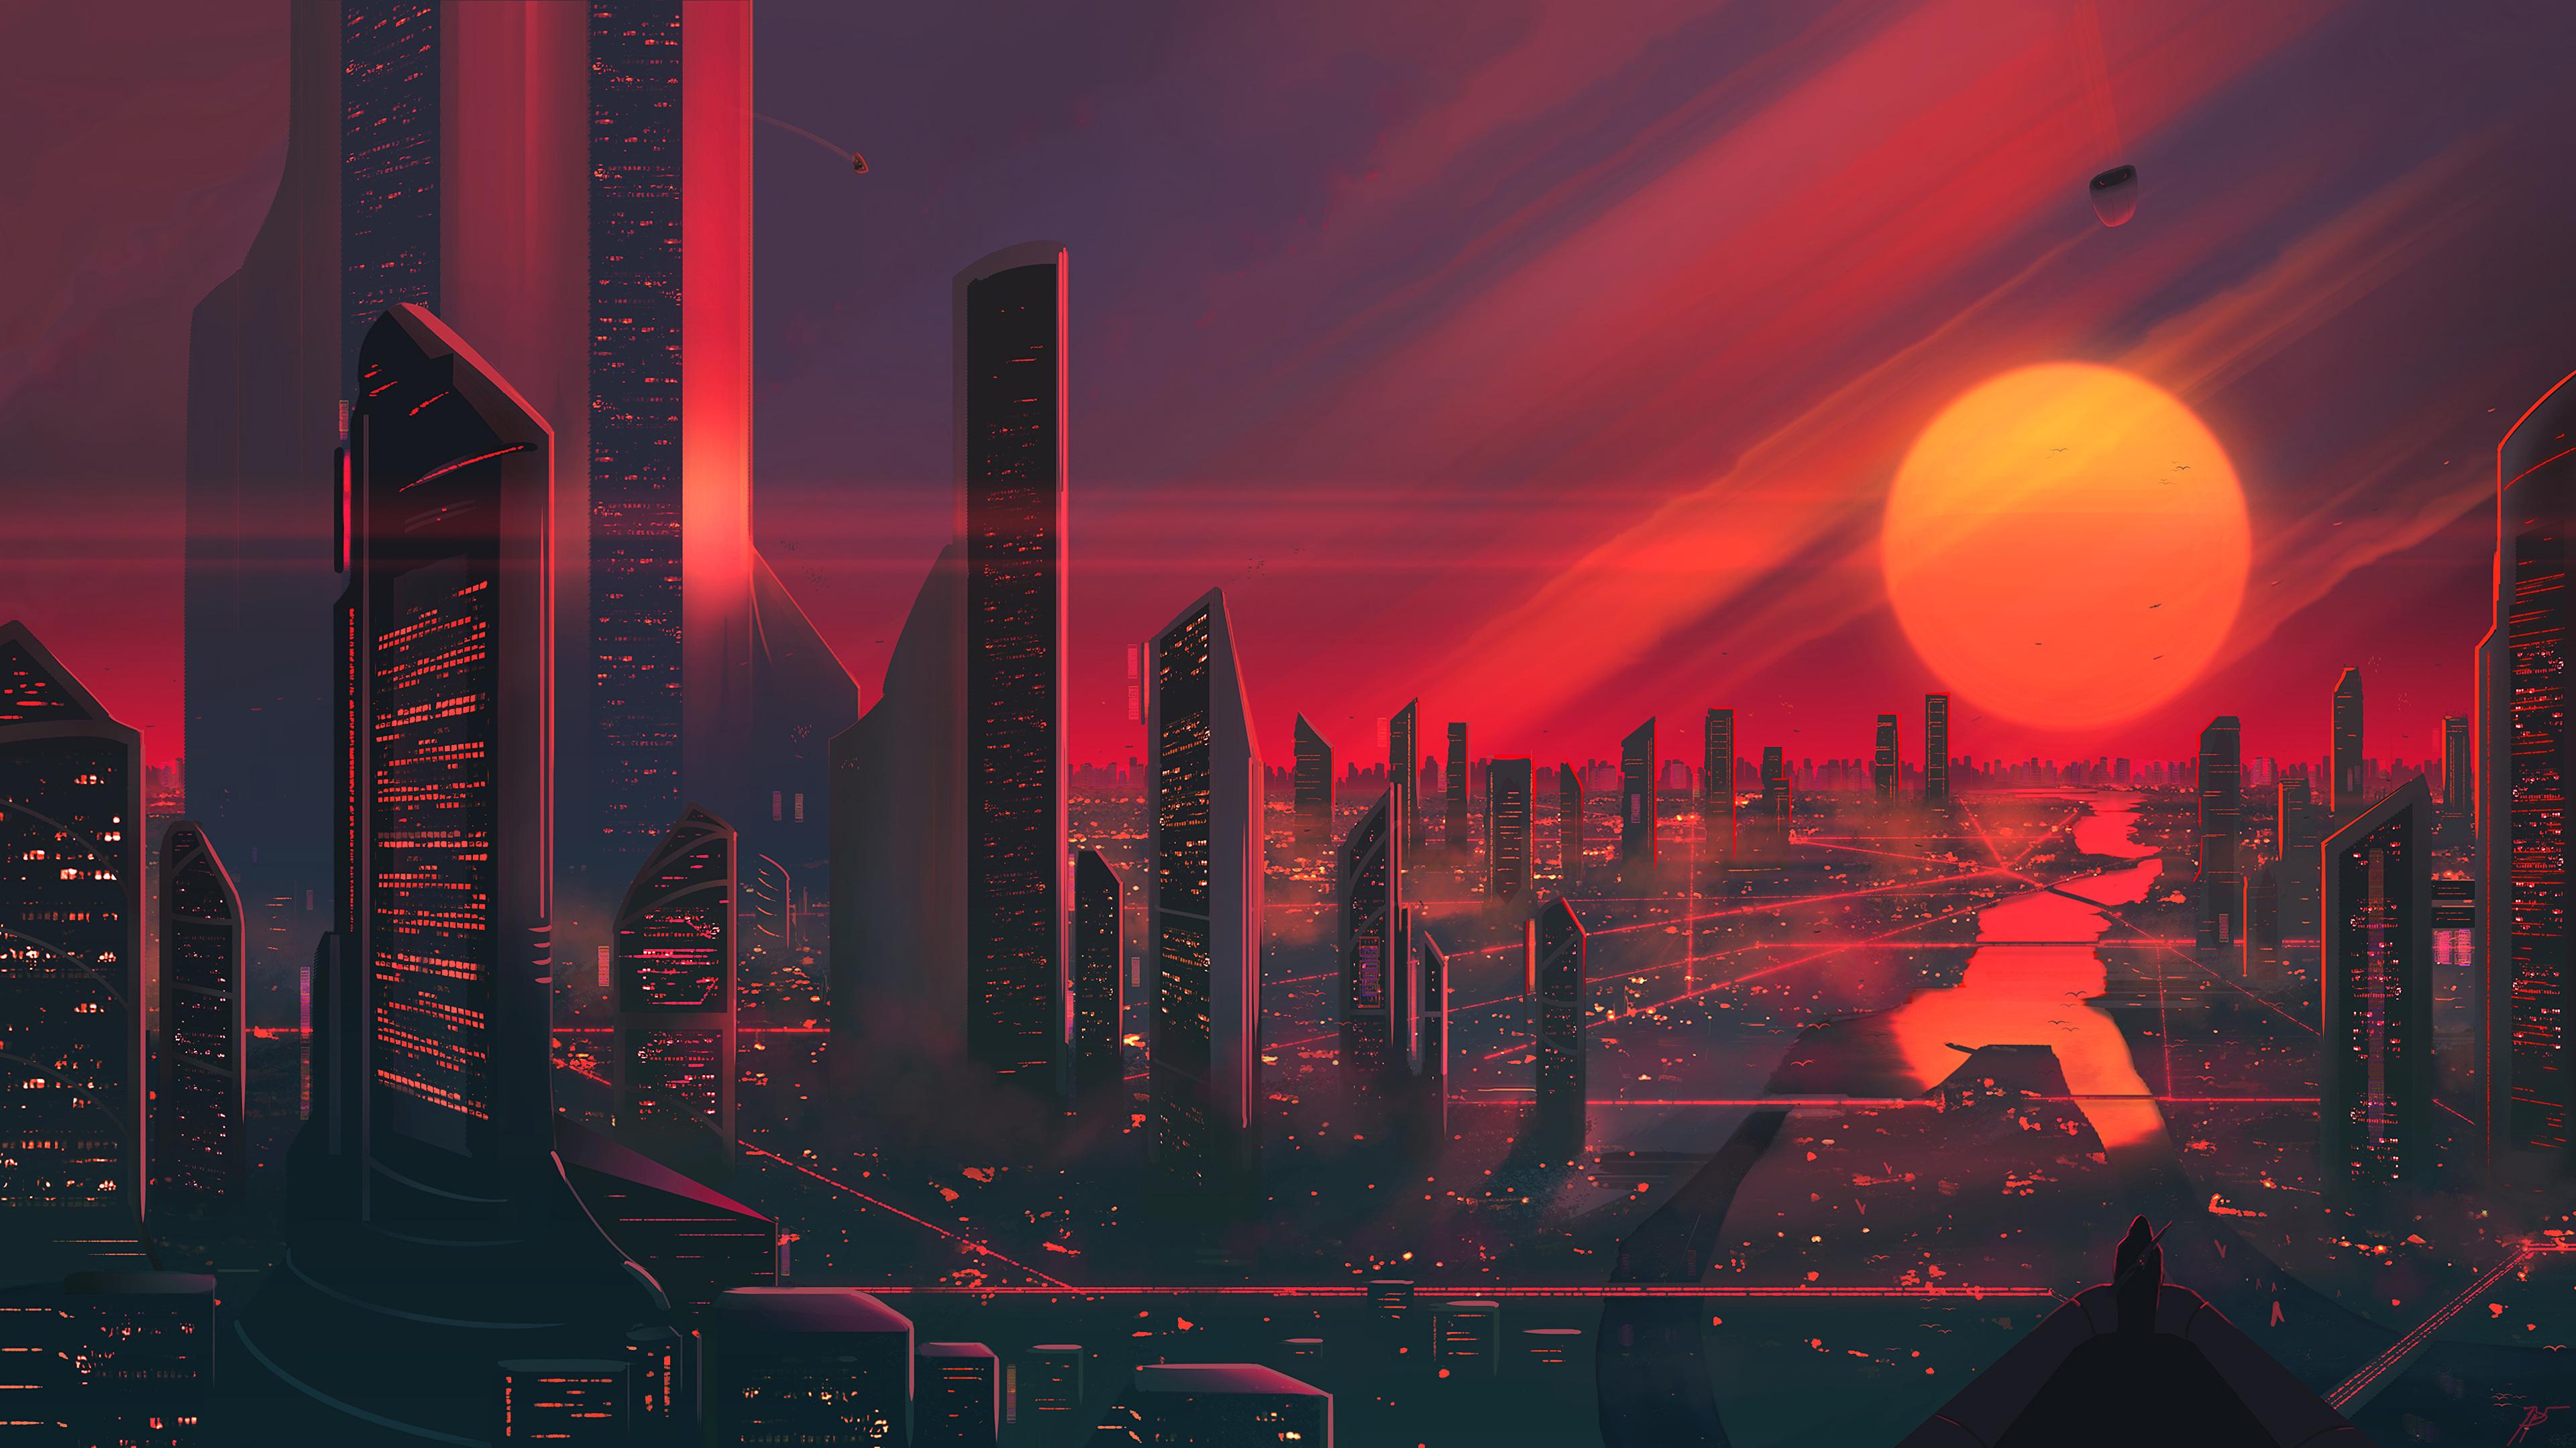 Sci Fi City Sunset Digital Art Illustration 4k Wallpaper